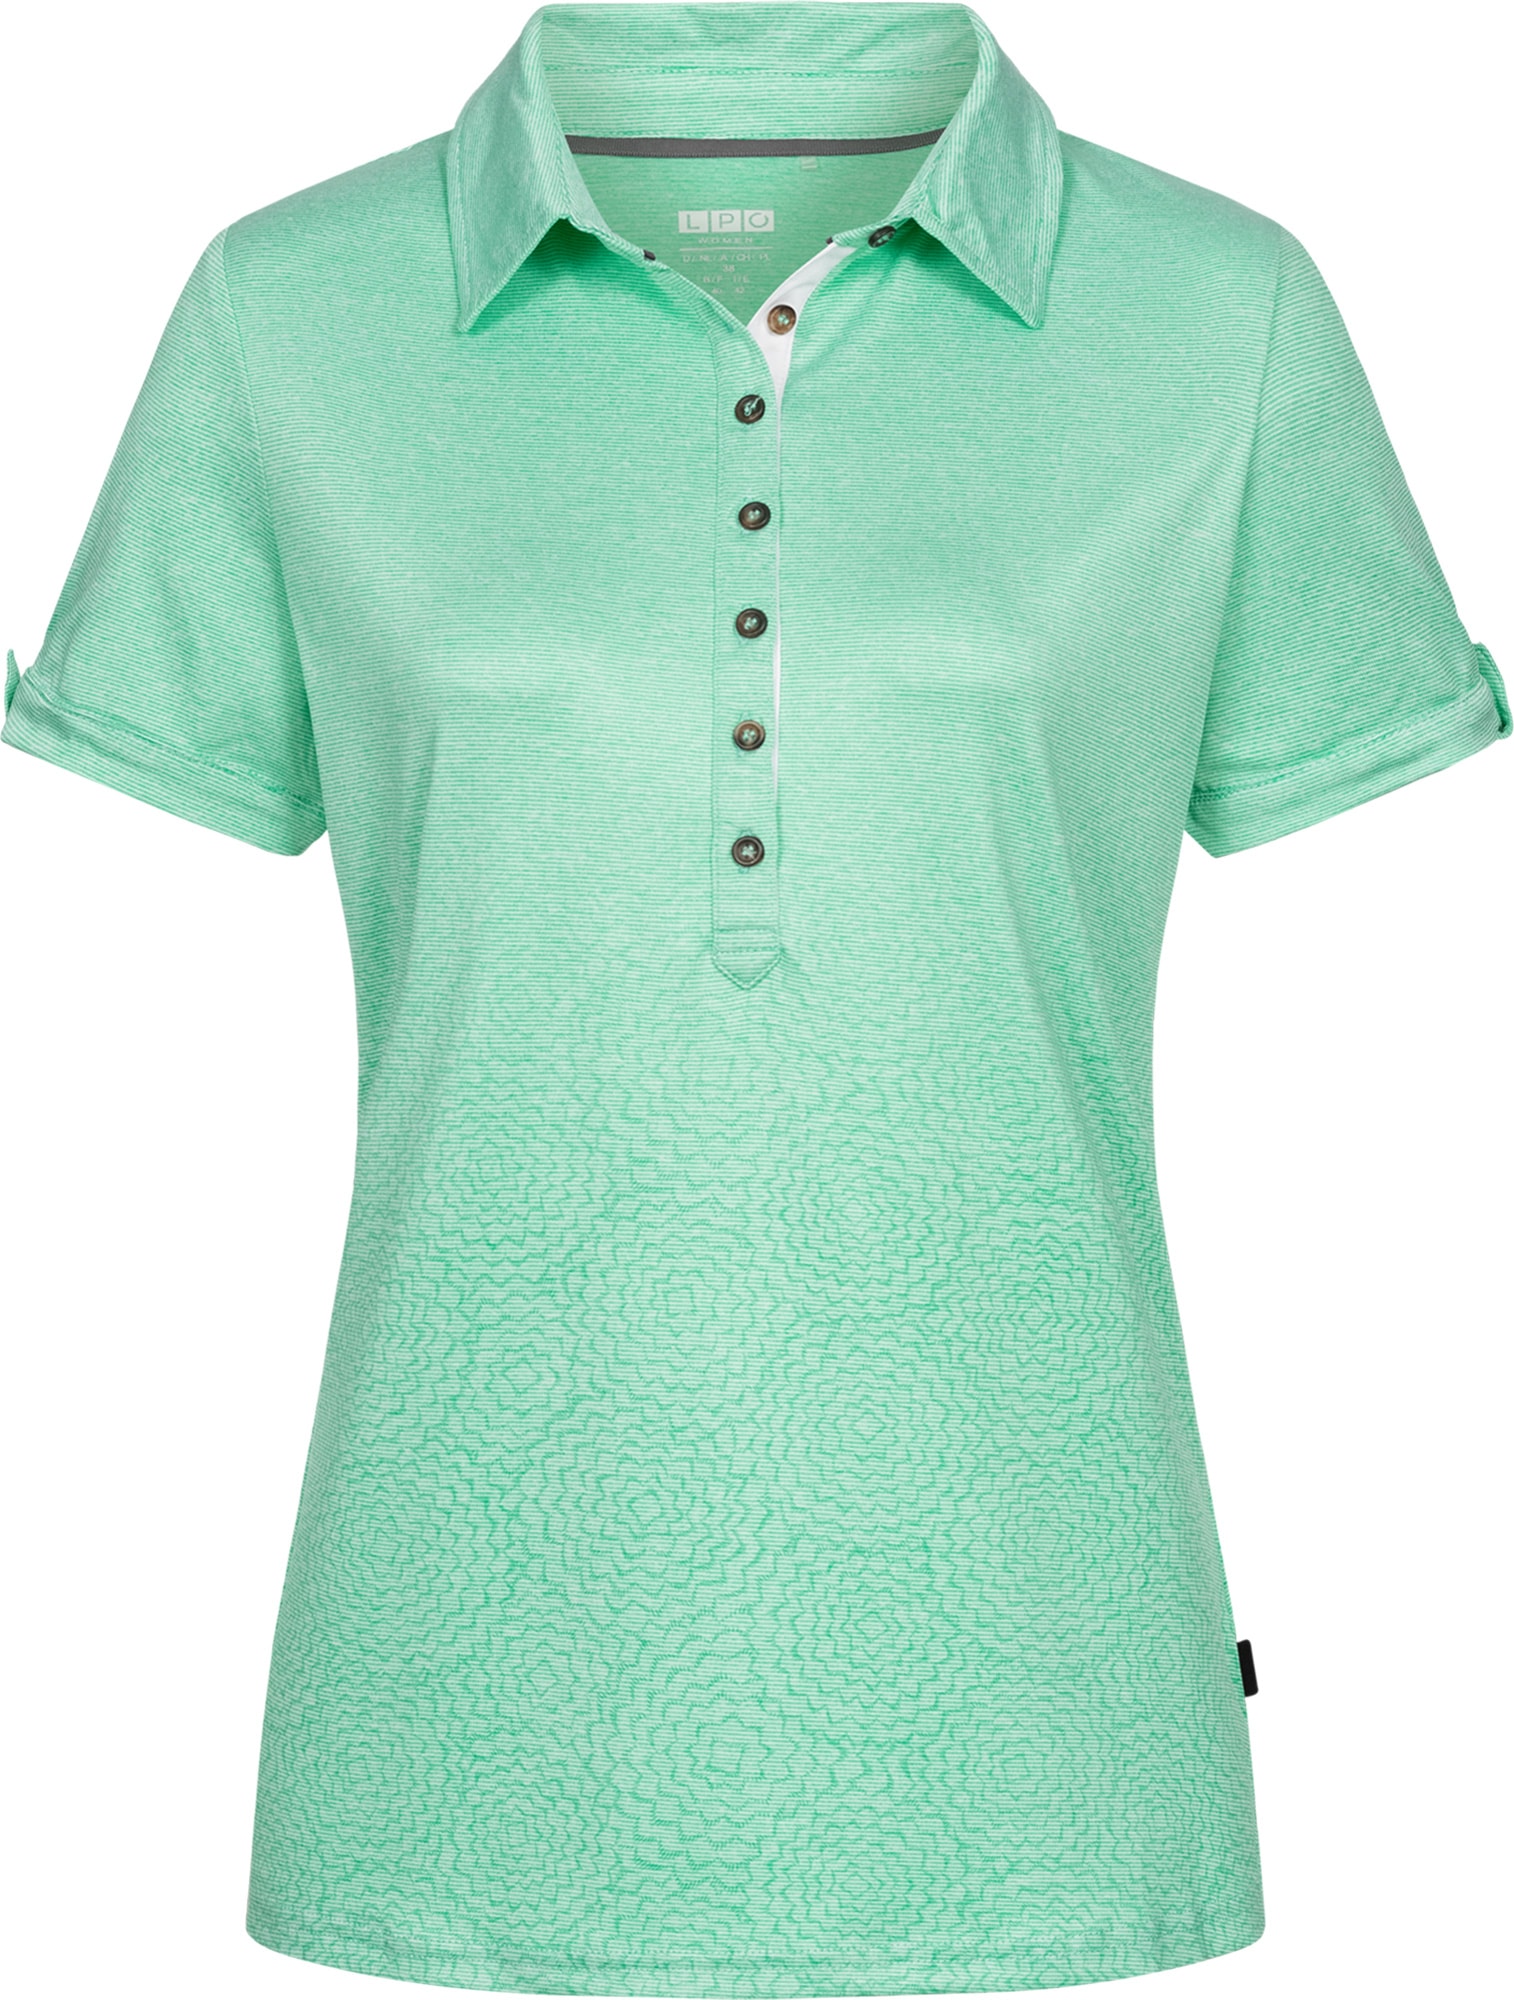 LPO Poloshirt »HEDLEY III NEW WOMEN«, Funktionspolo mit nachhaltig recyceltem Polyester von LPO